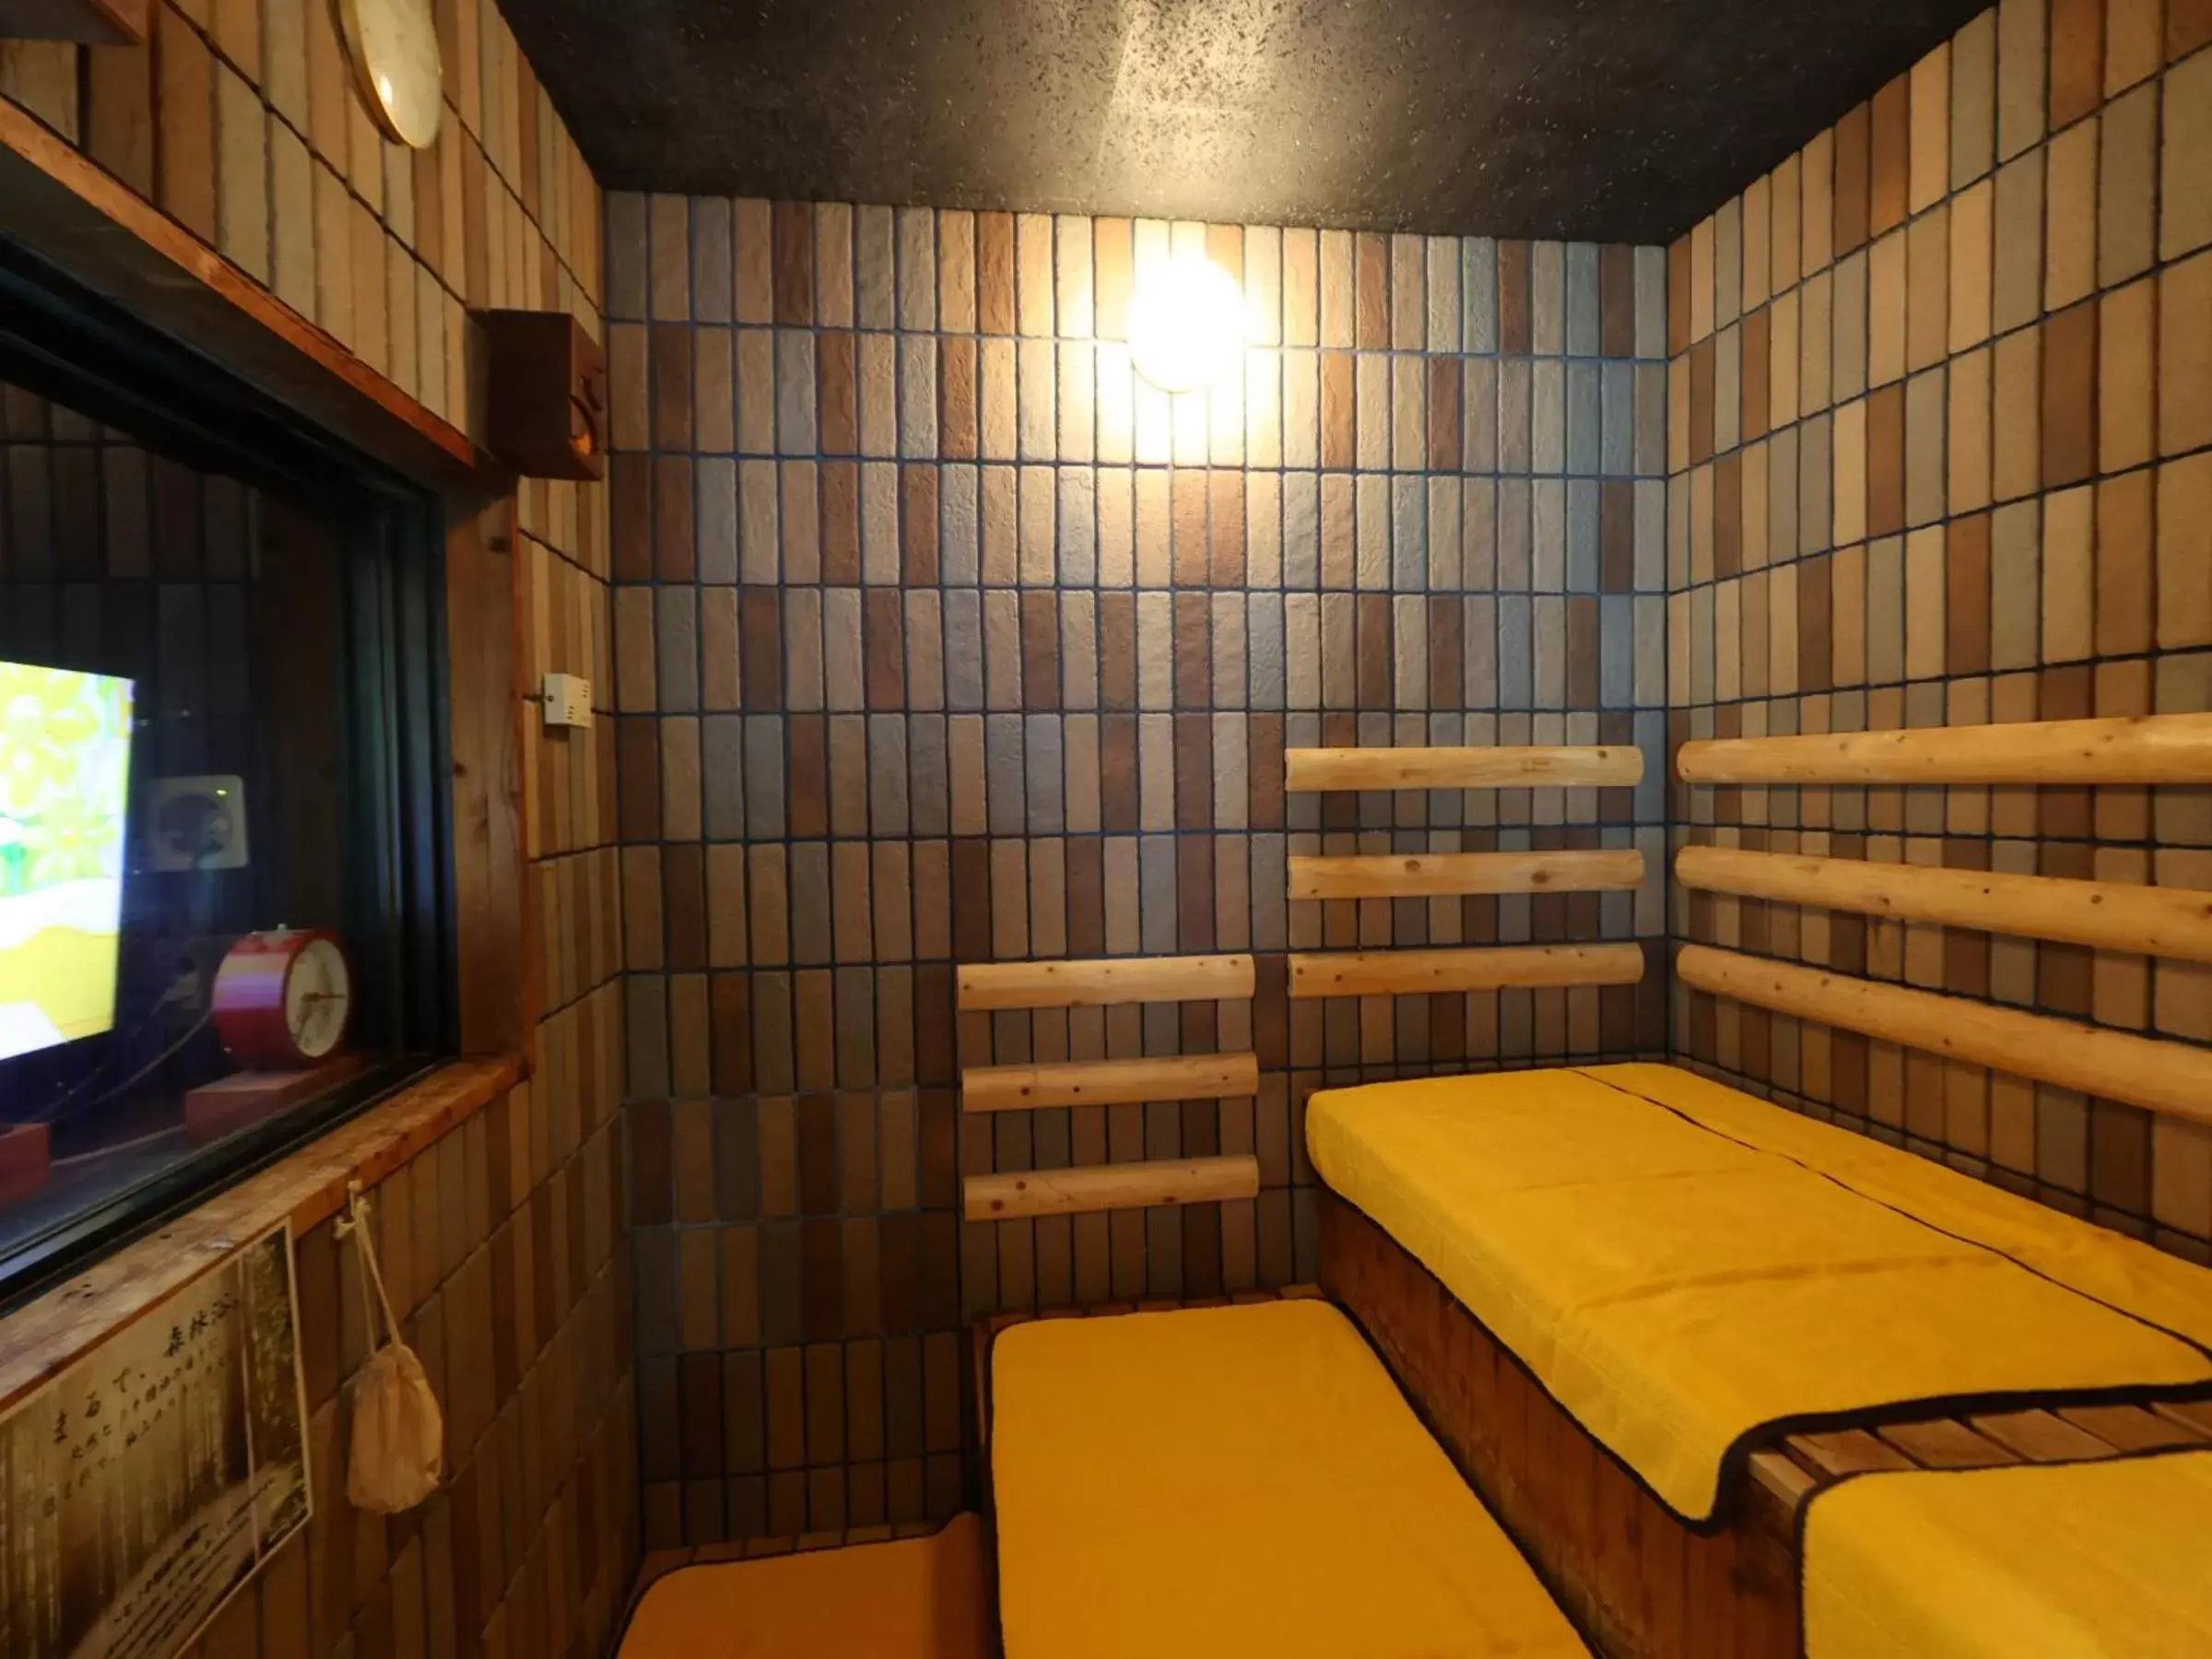 Dormy Inn Takasaki